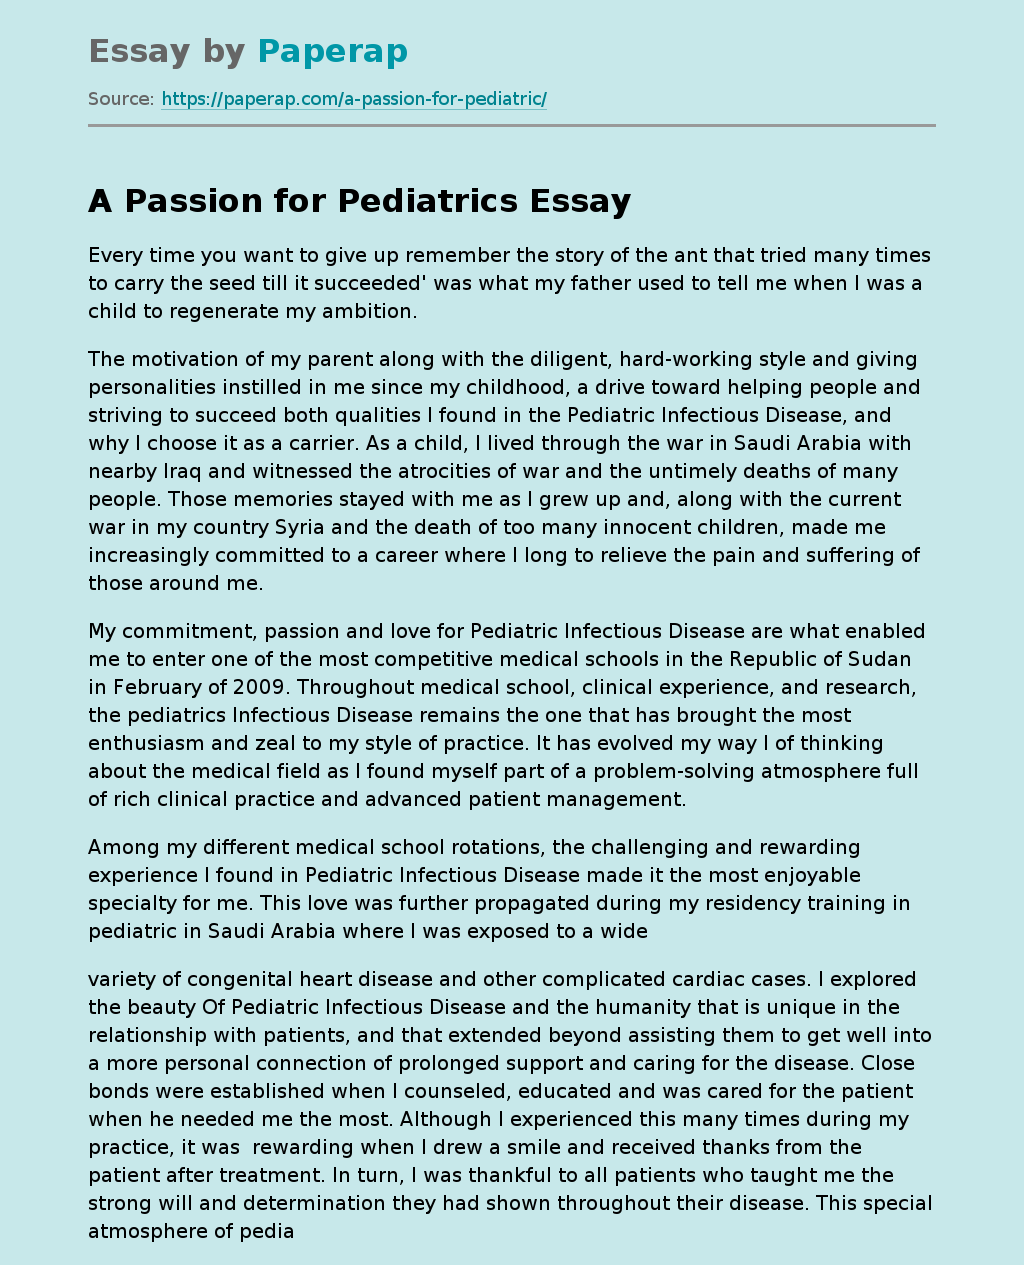 A Passion for Pediatrics